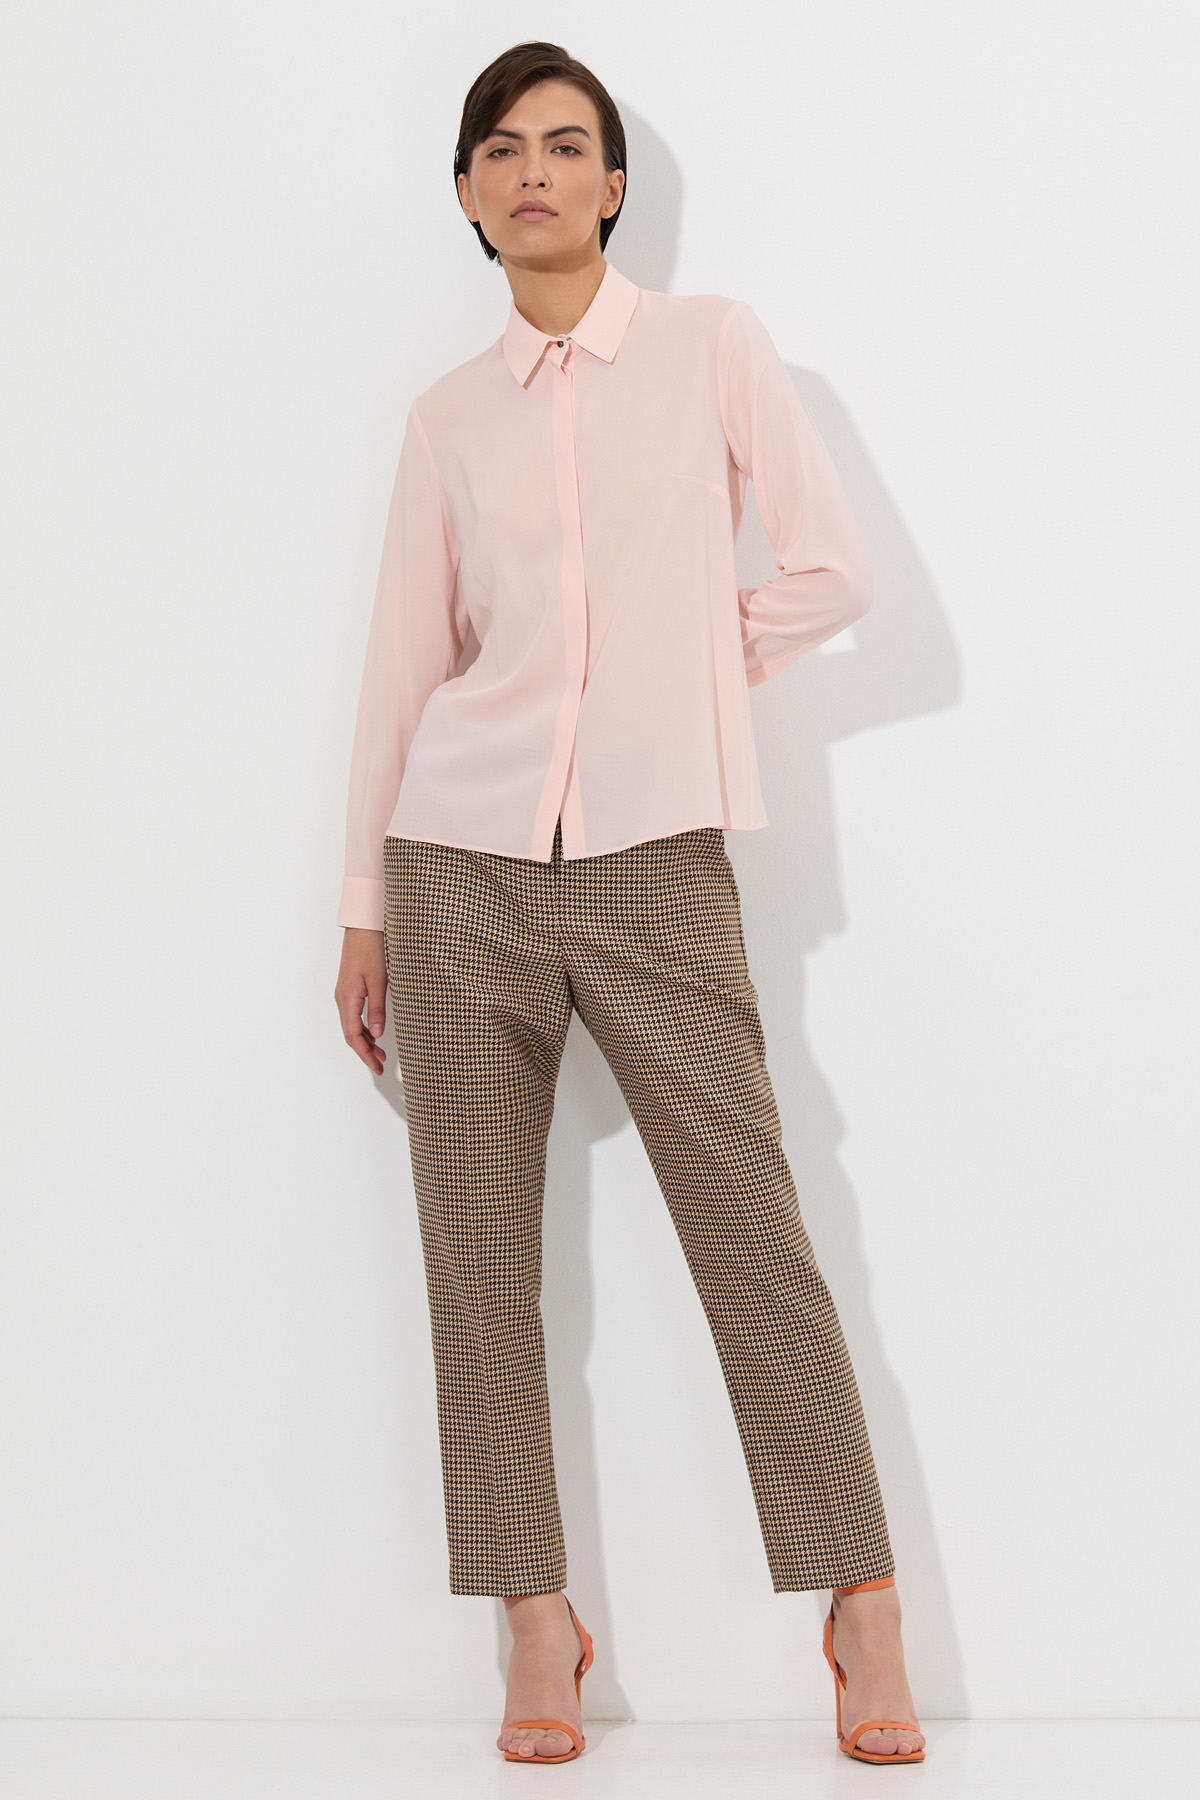 Розовая Блуза-Рубашка 2101755 Для Беременных